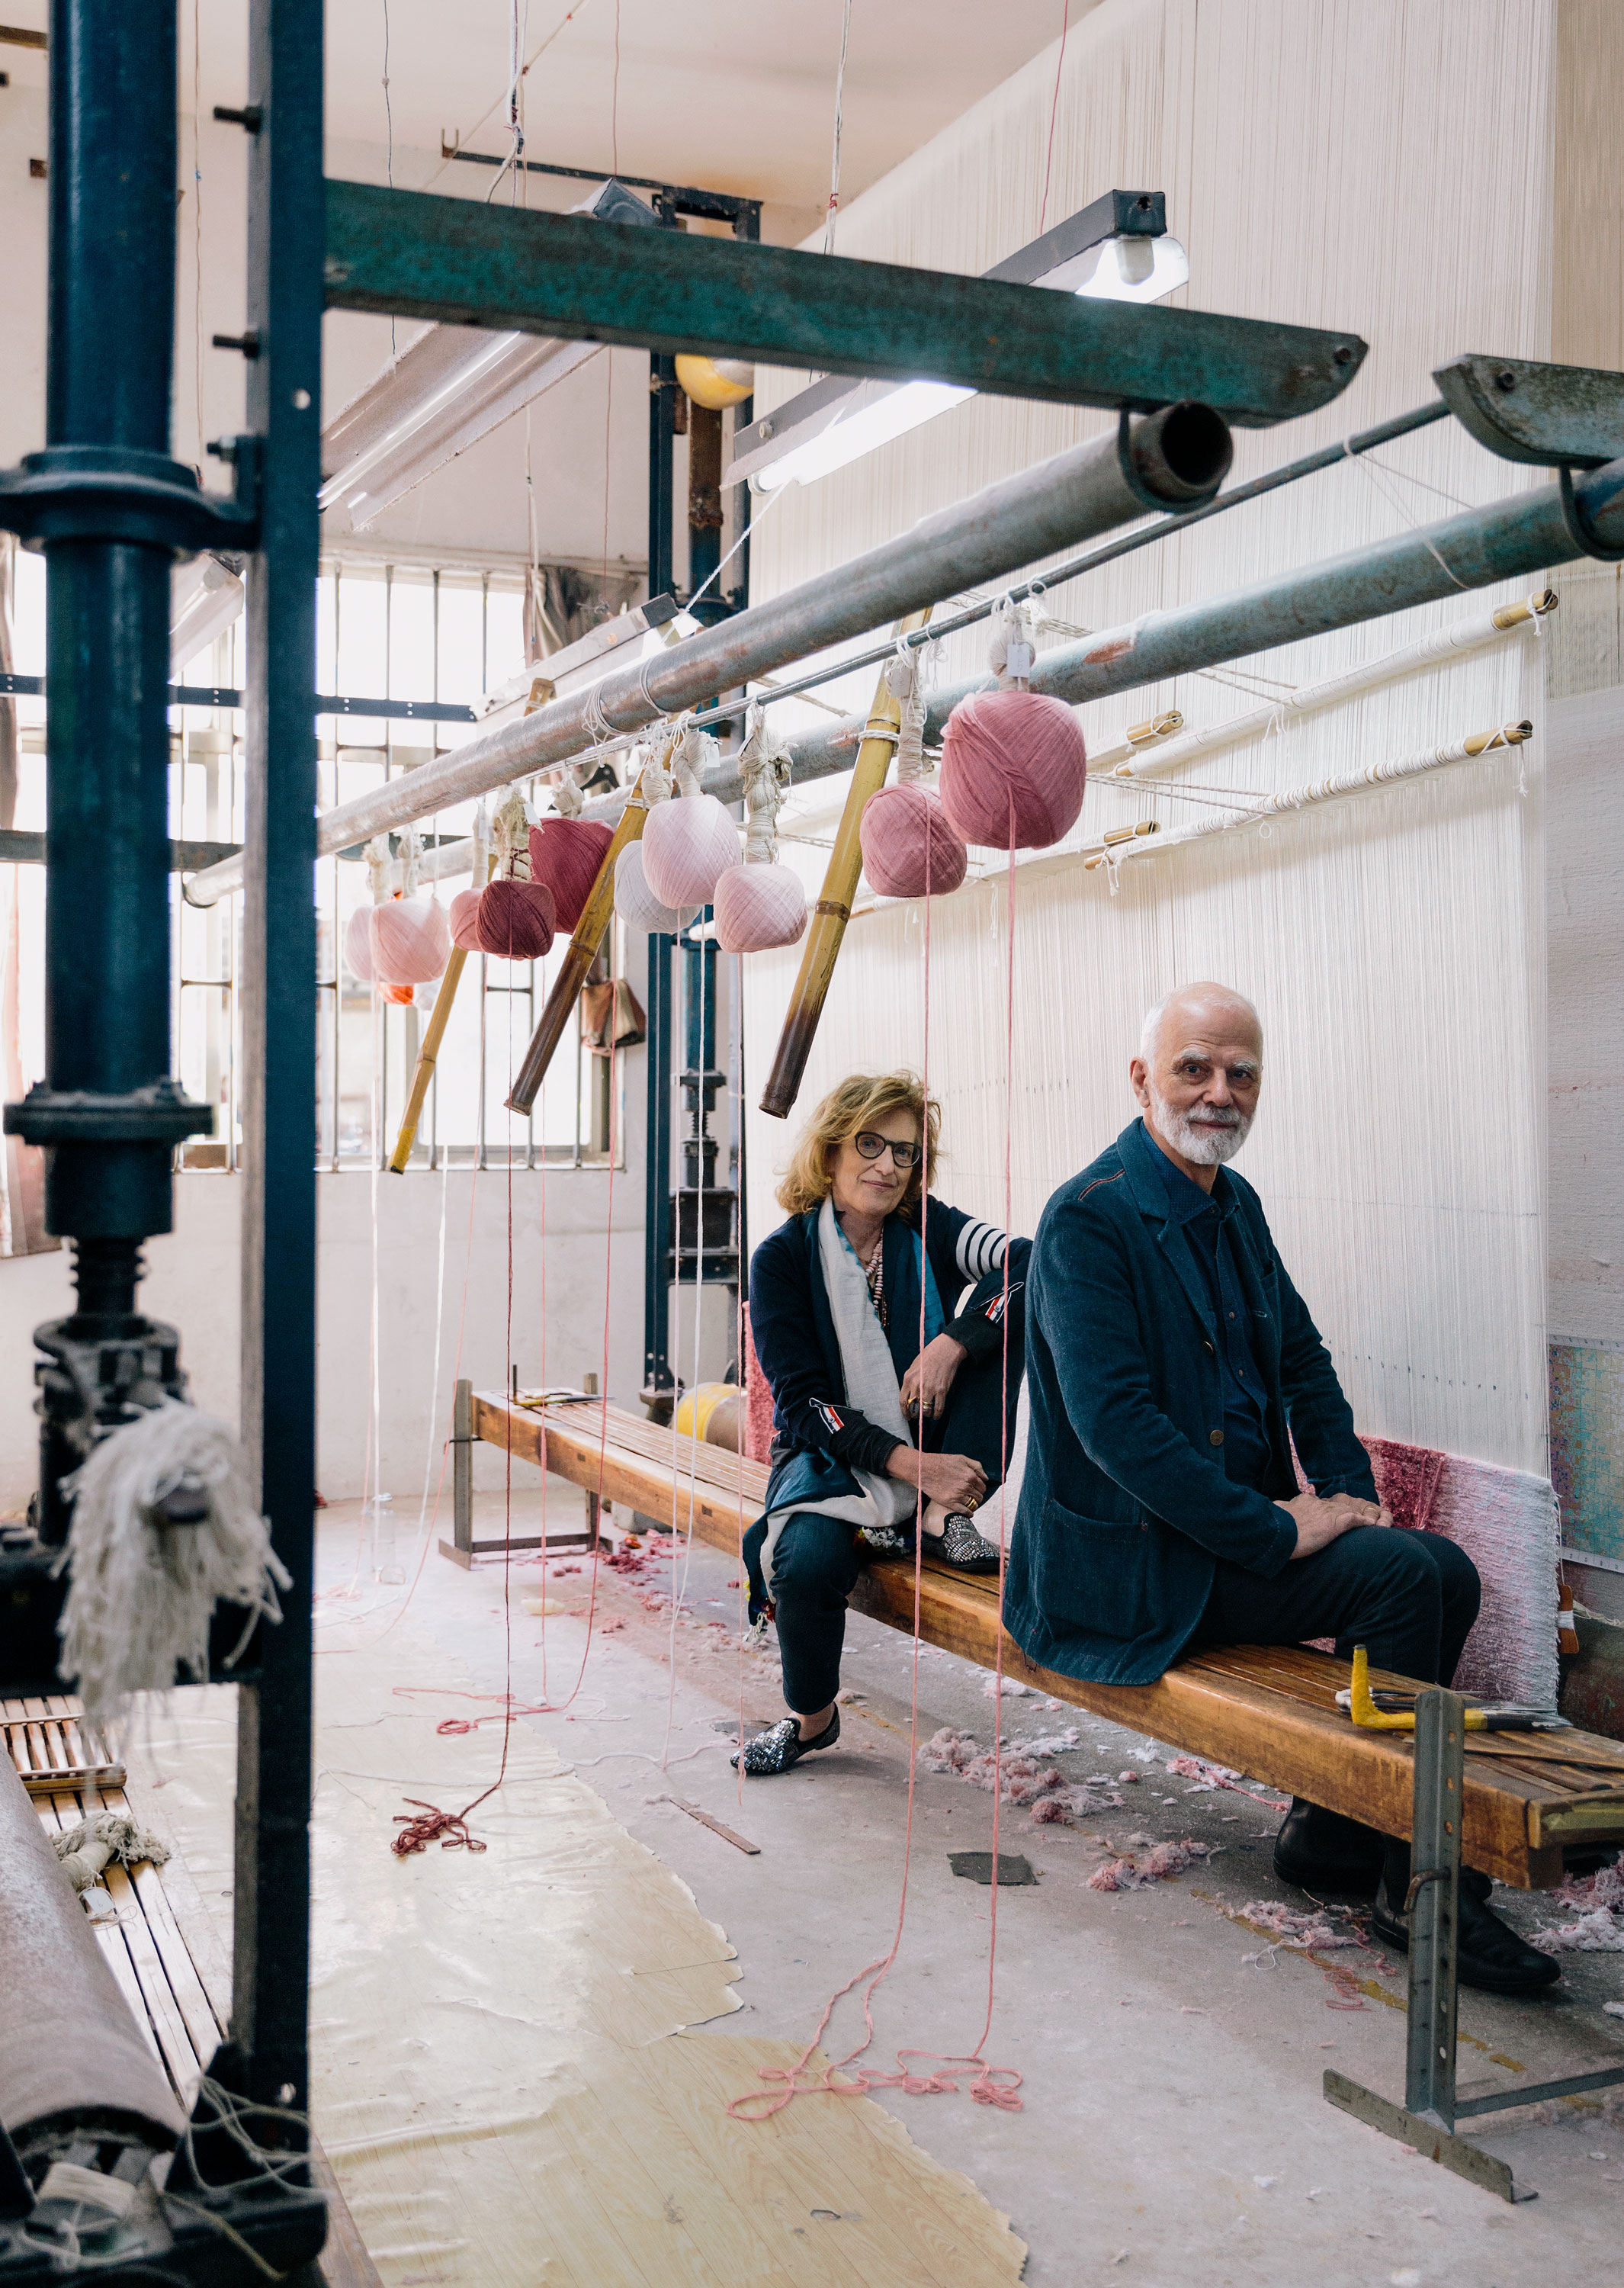 Artists Janis Provisor and Brad Davis Transform Their Paintings into Plush with Fort Street Studio